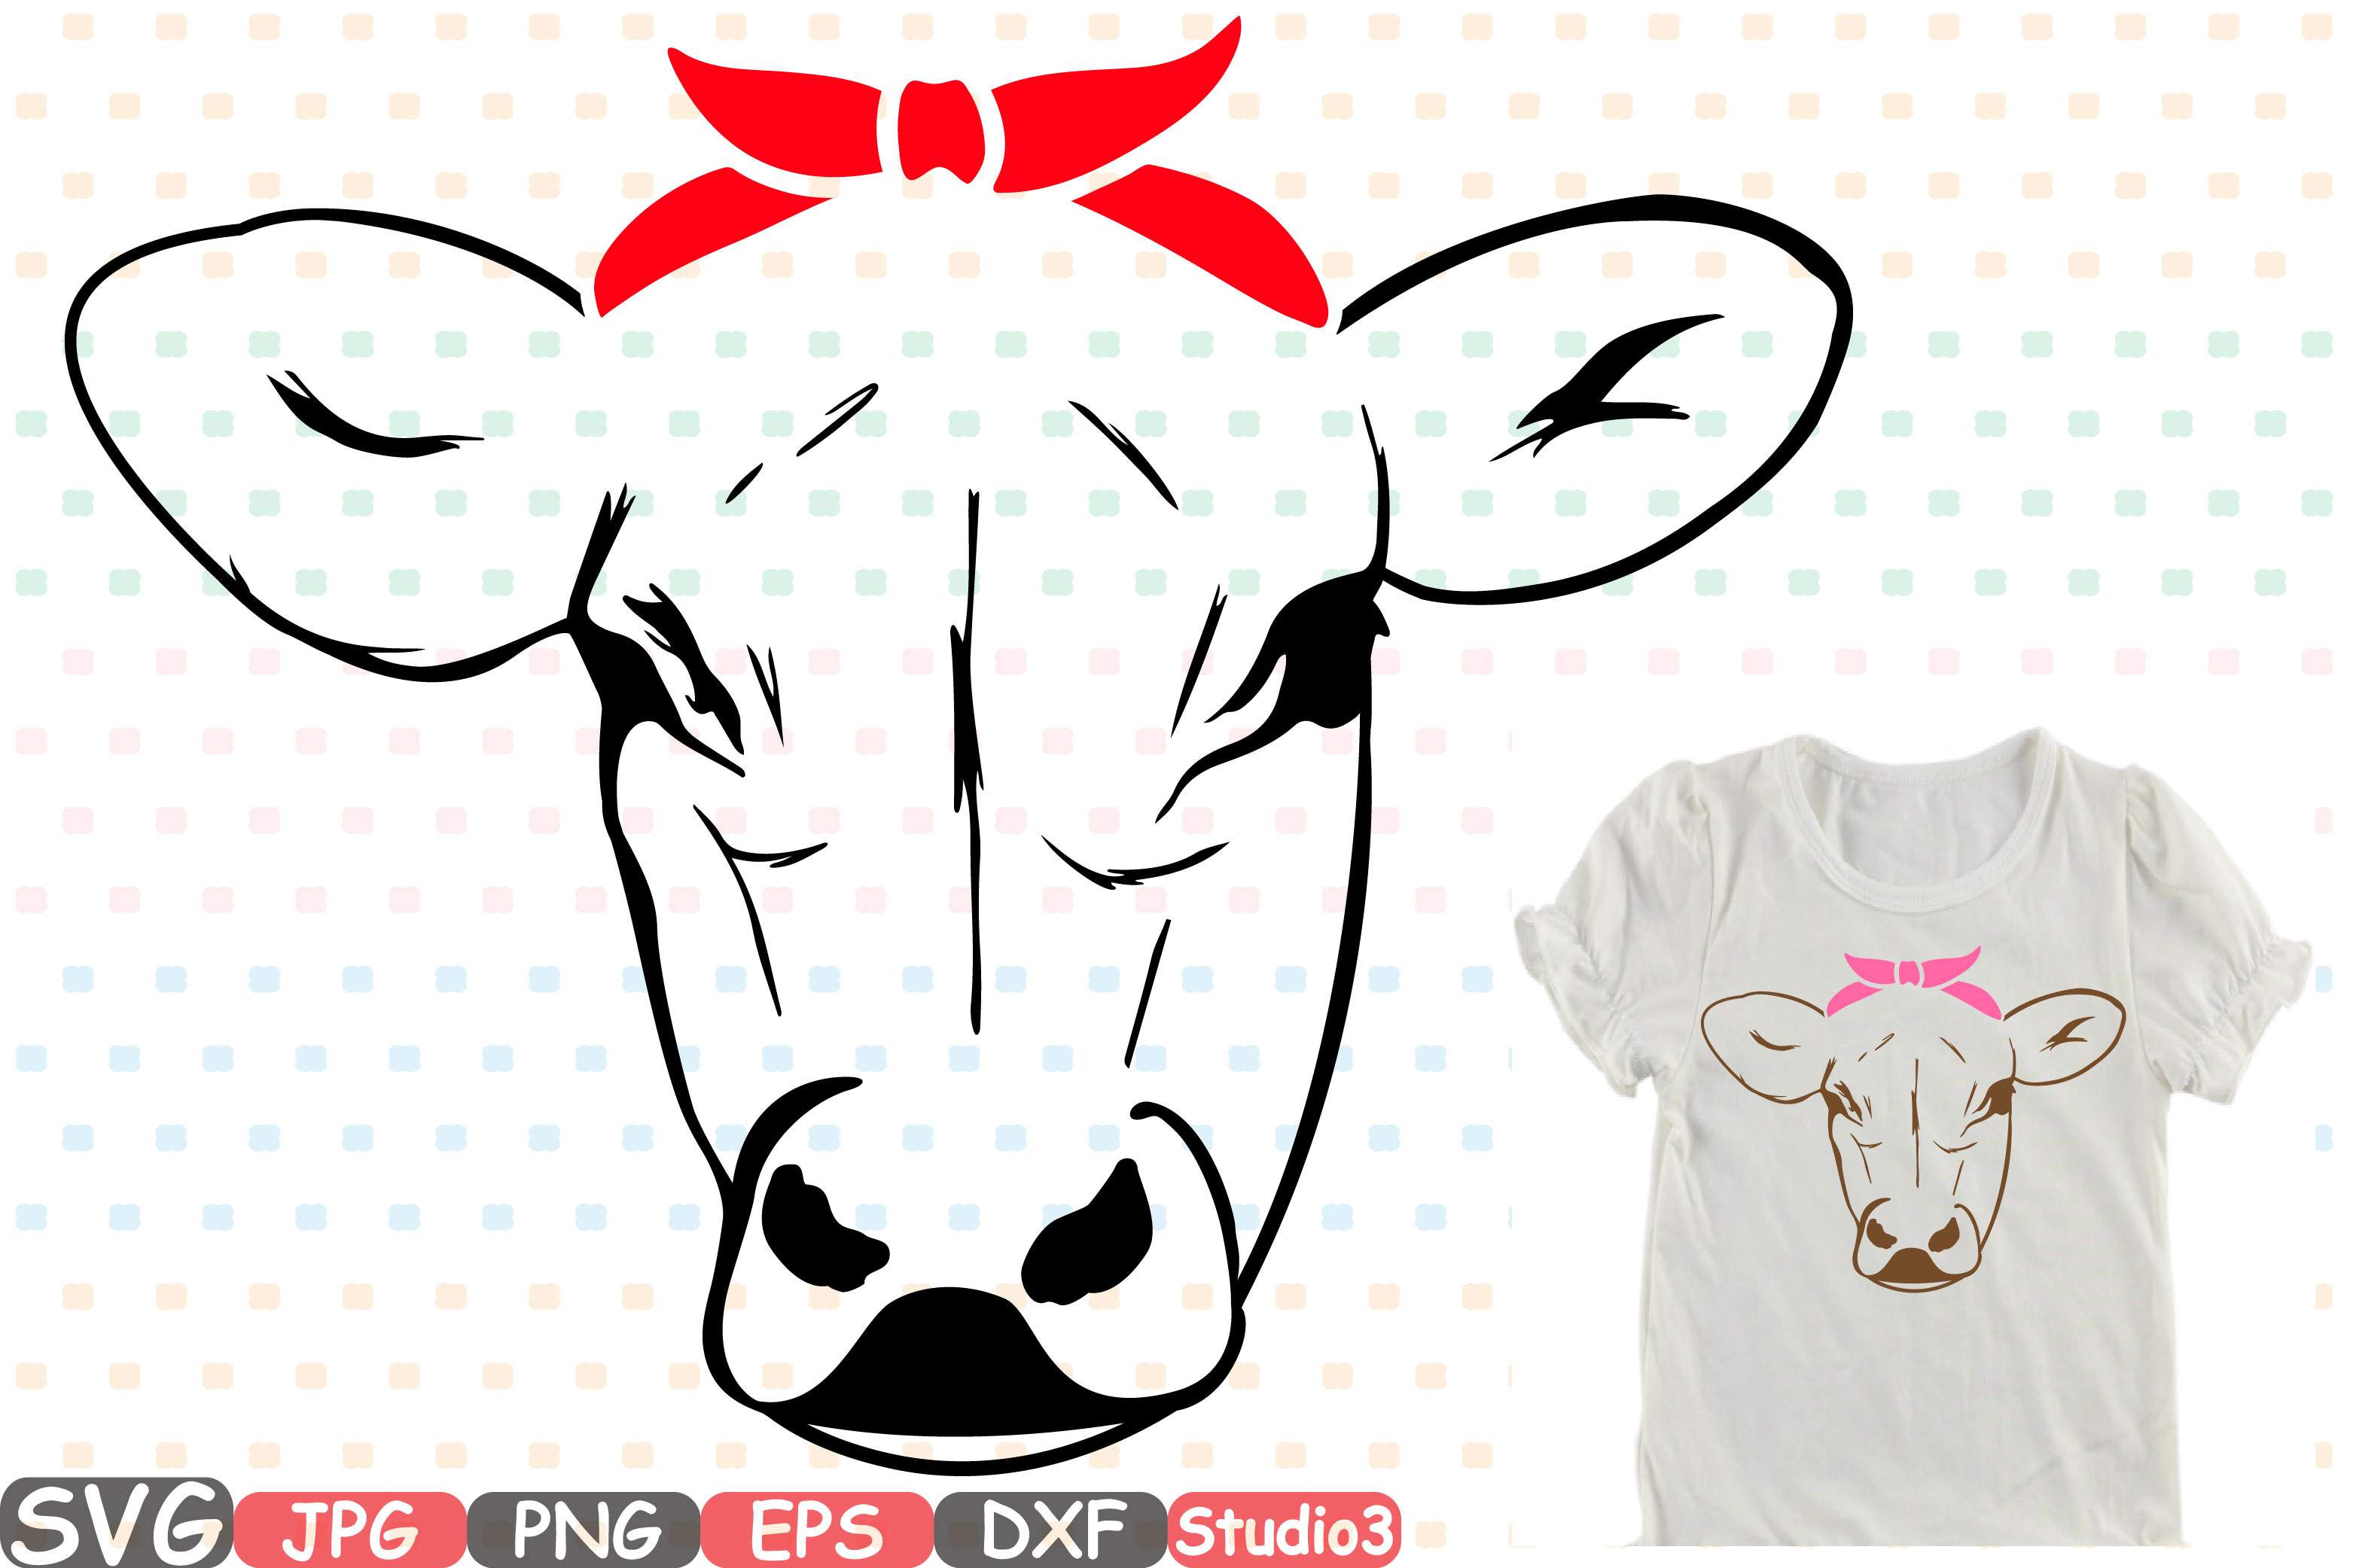 Download Cow Head whit Bandana Silhouette SVG Cu | Design Bundles